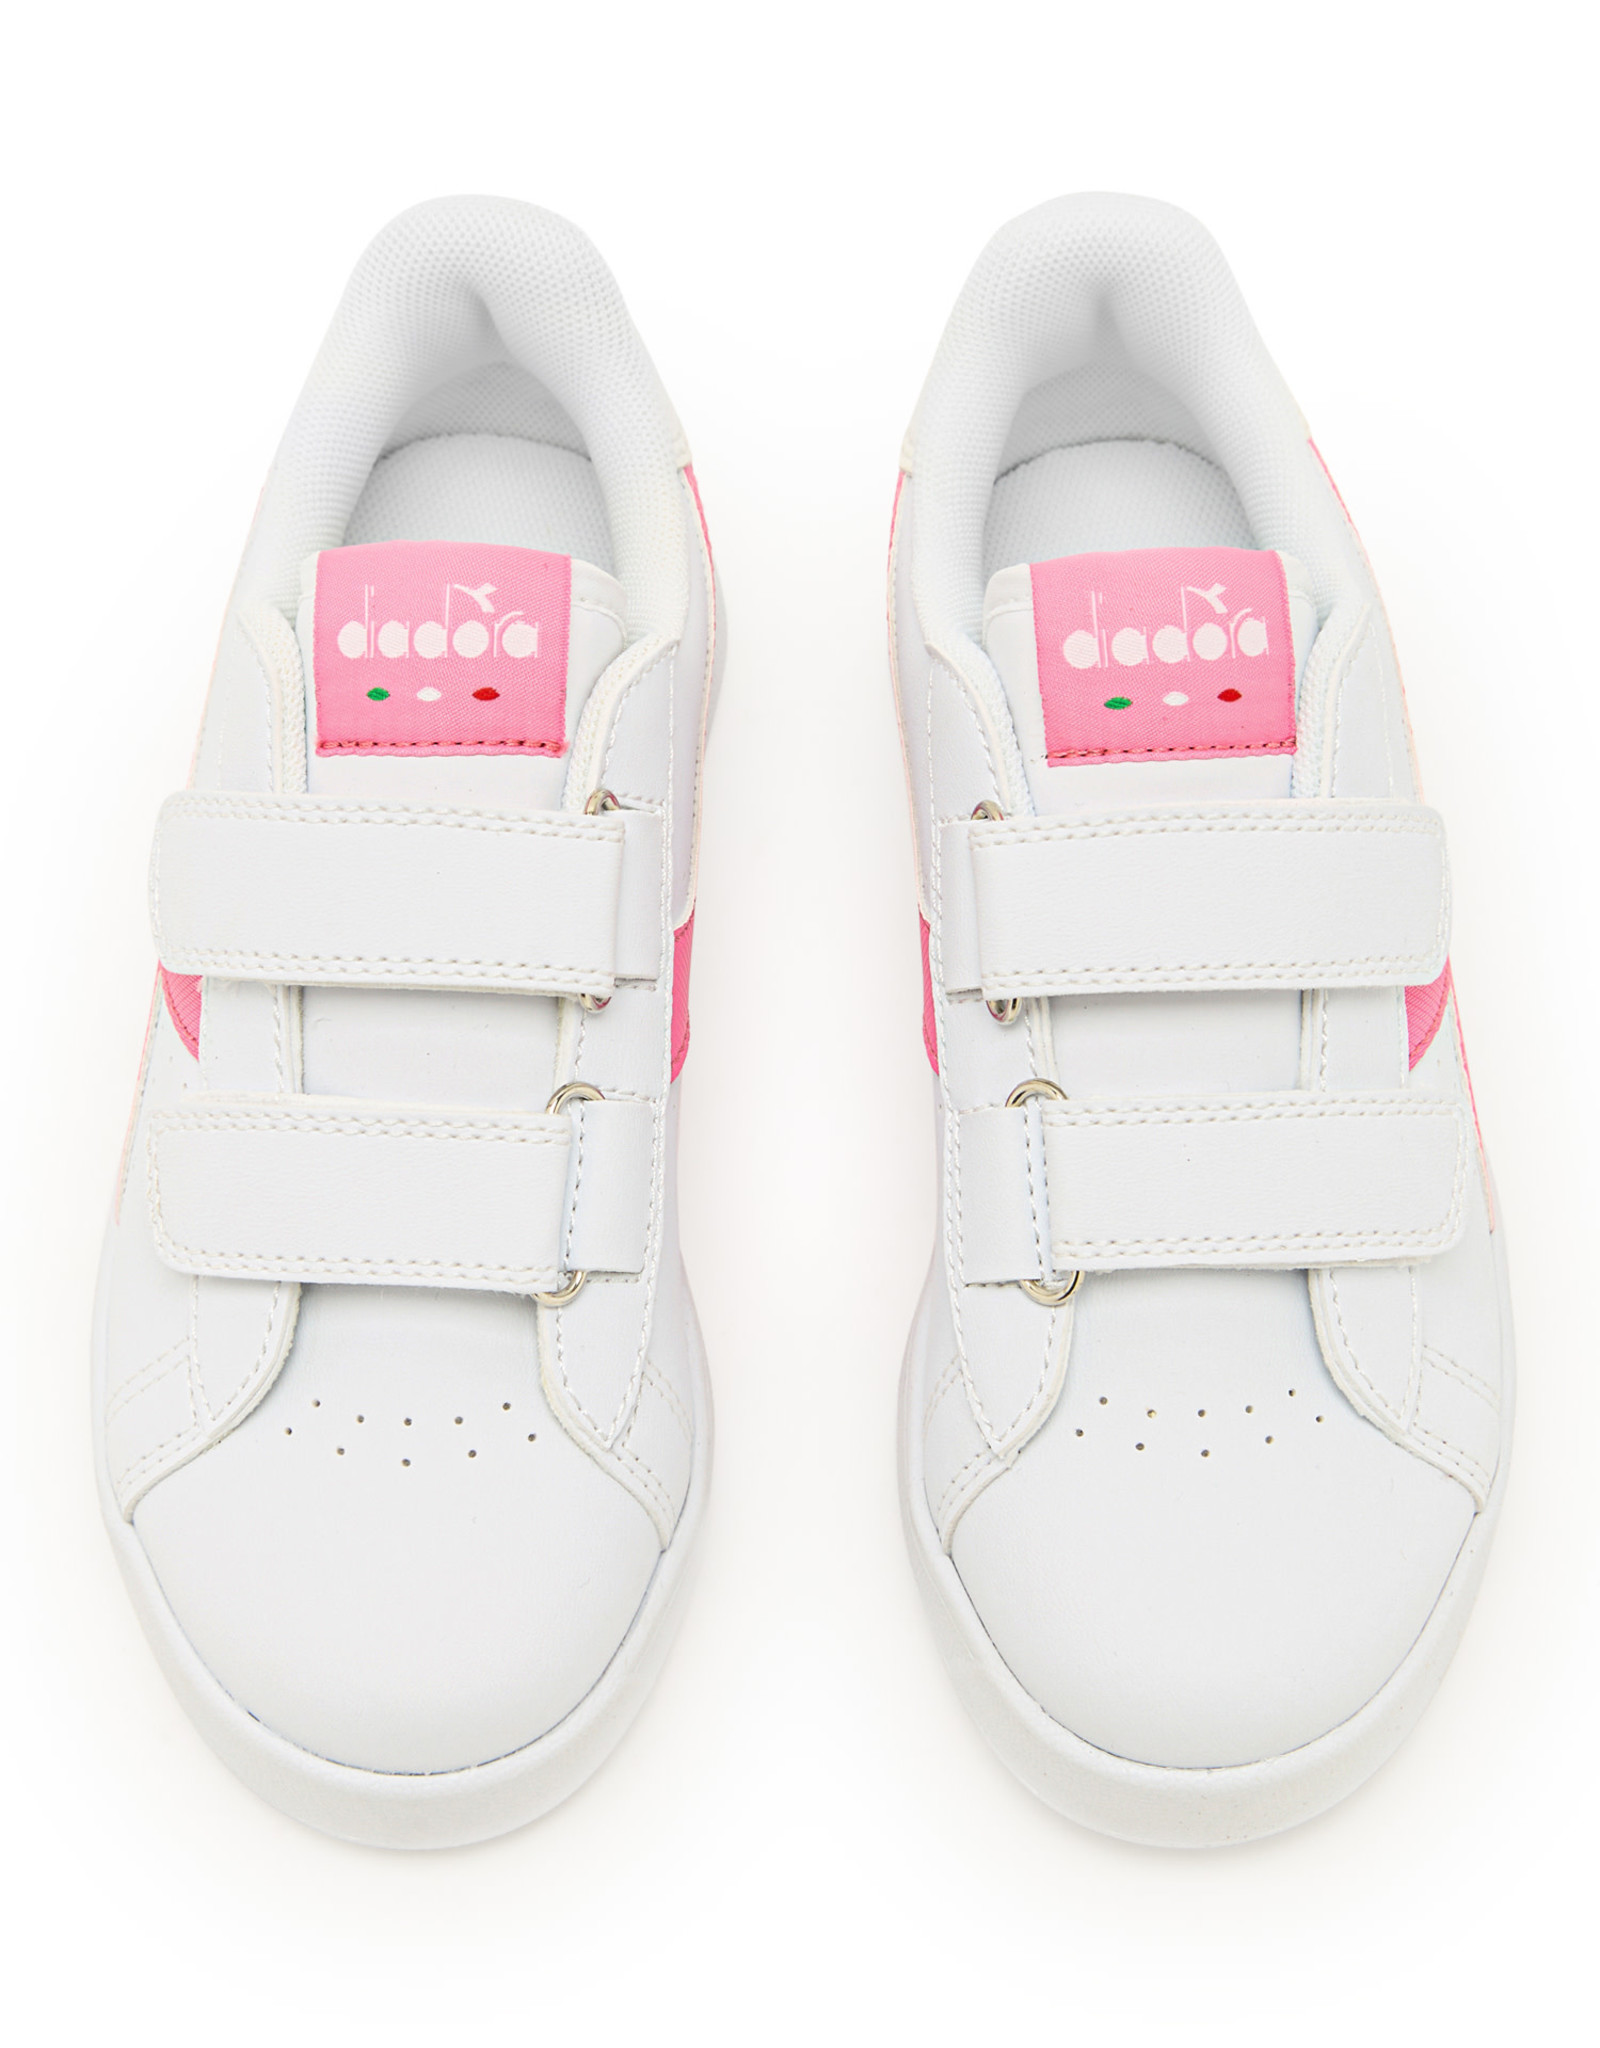 DIADORA DIADORA Sneaker wit/roze plakkers